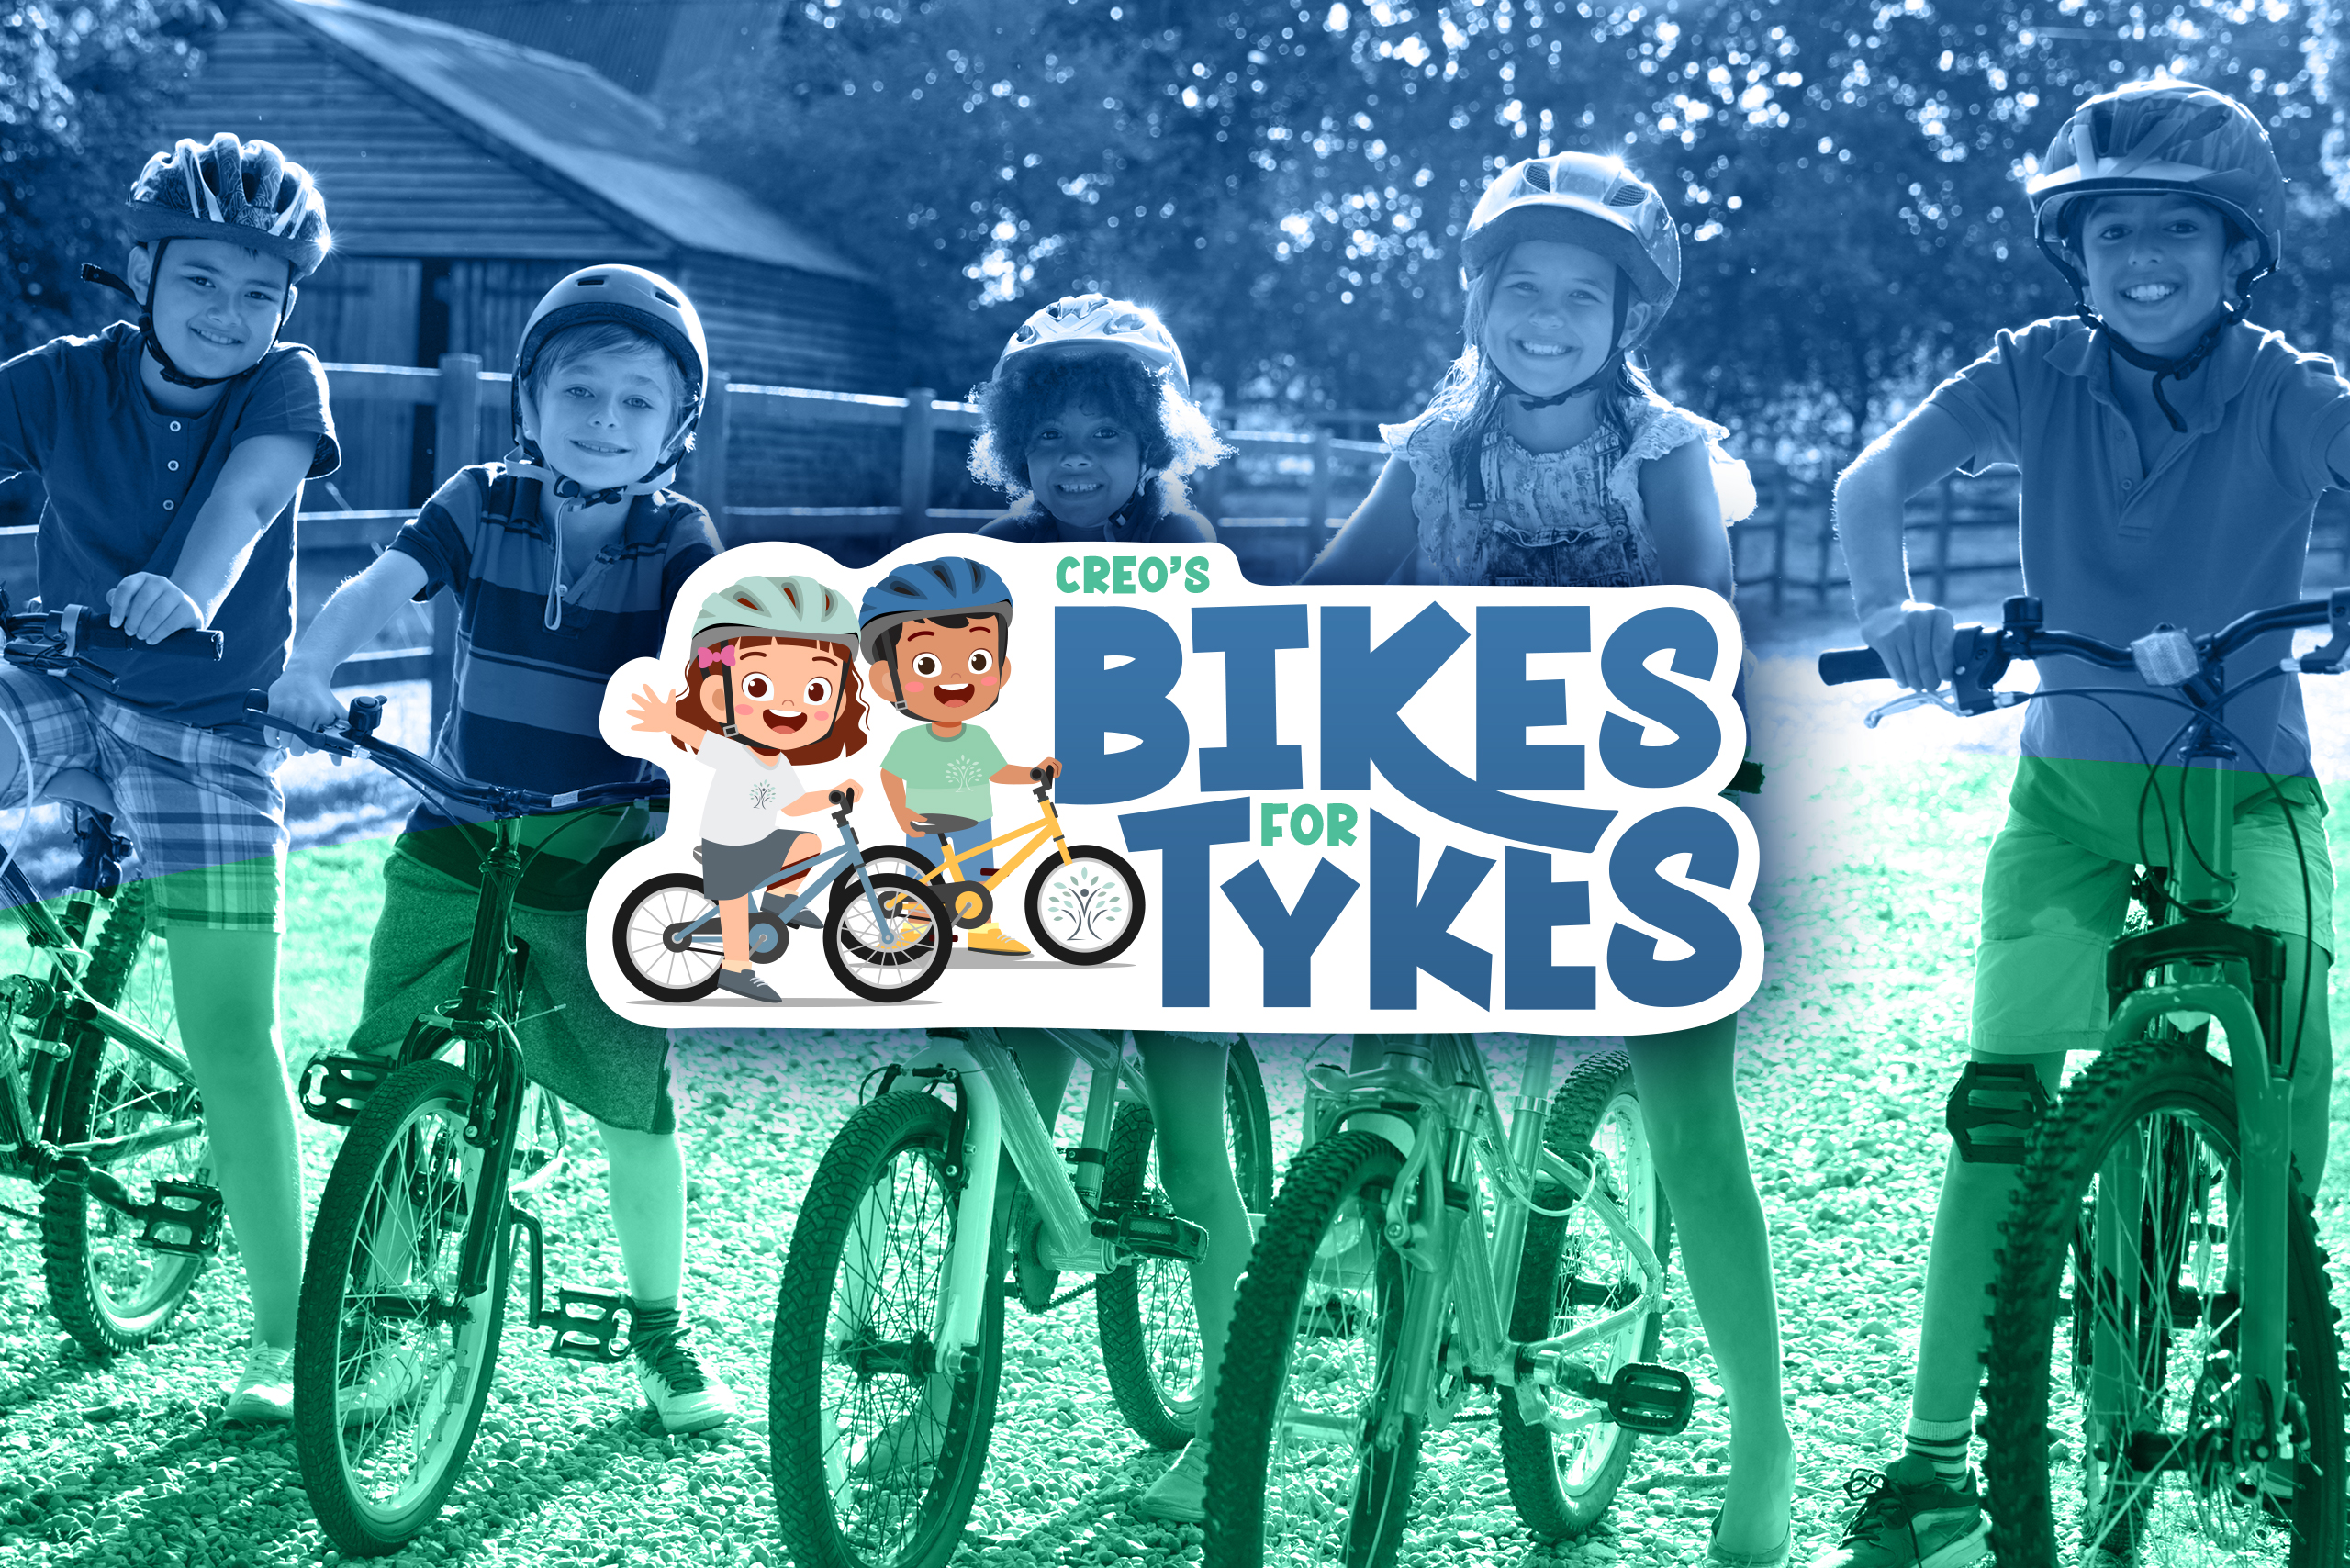 Creo’s Bikes for Tykes